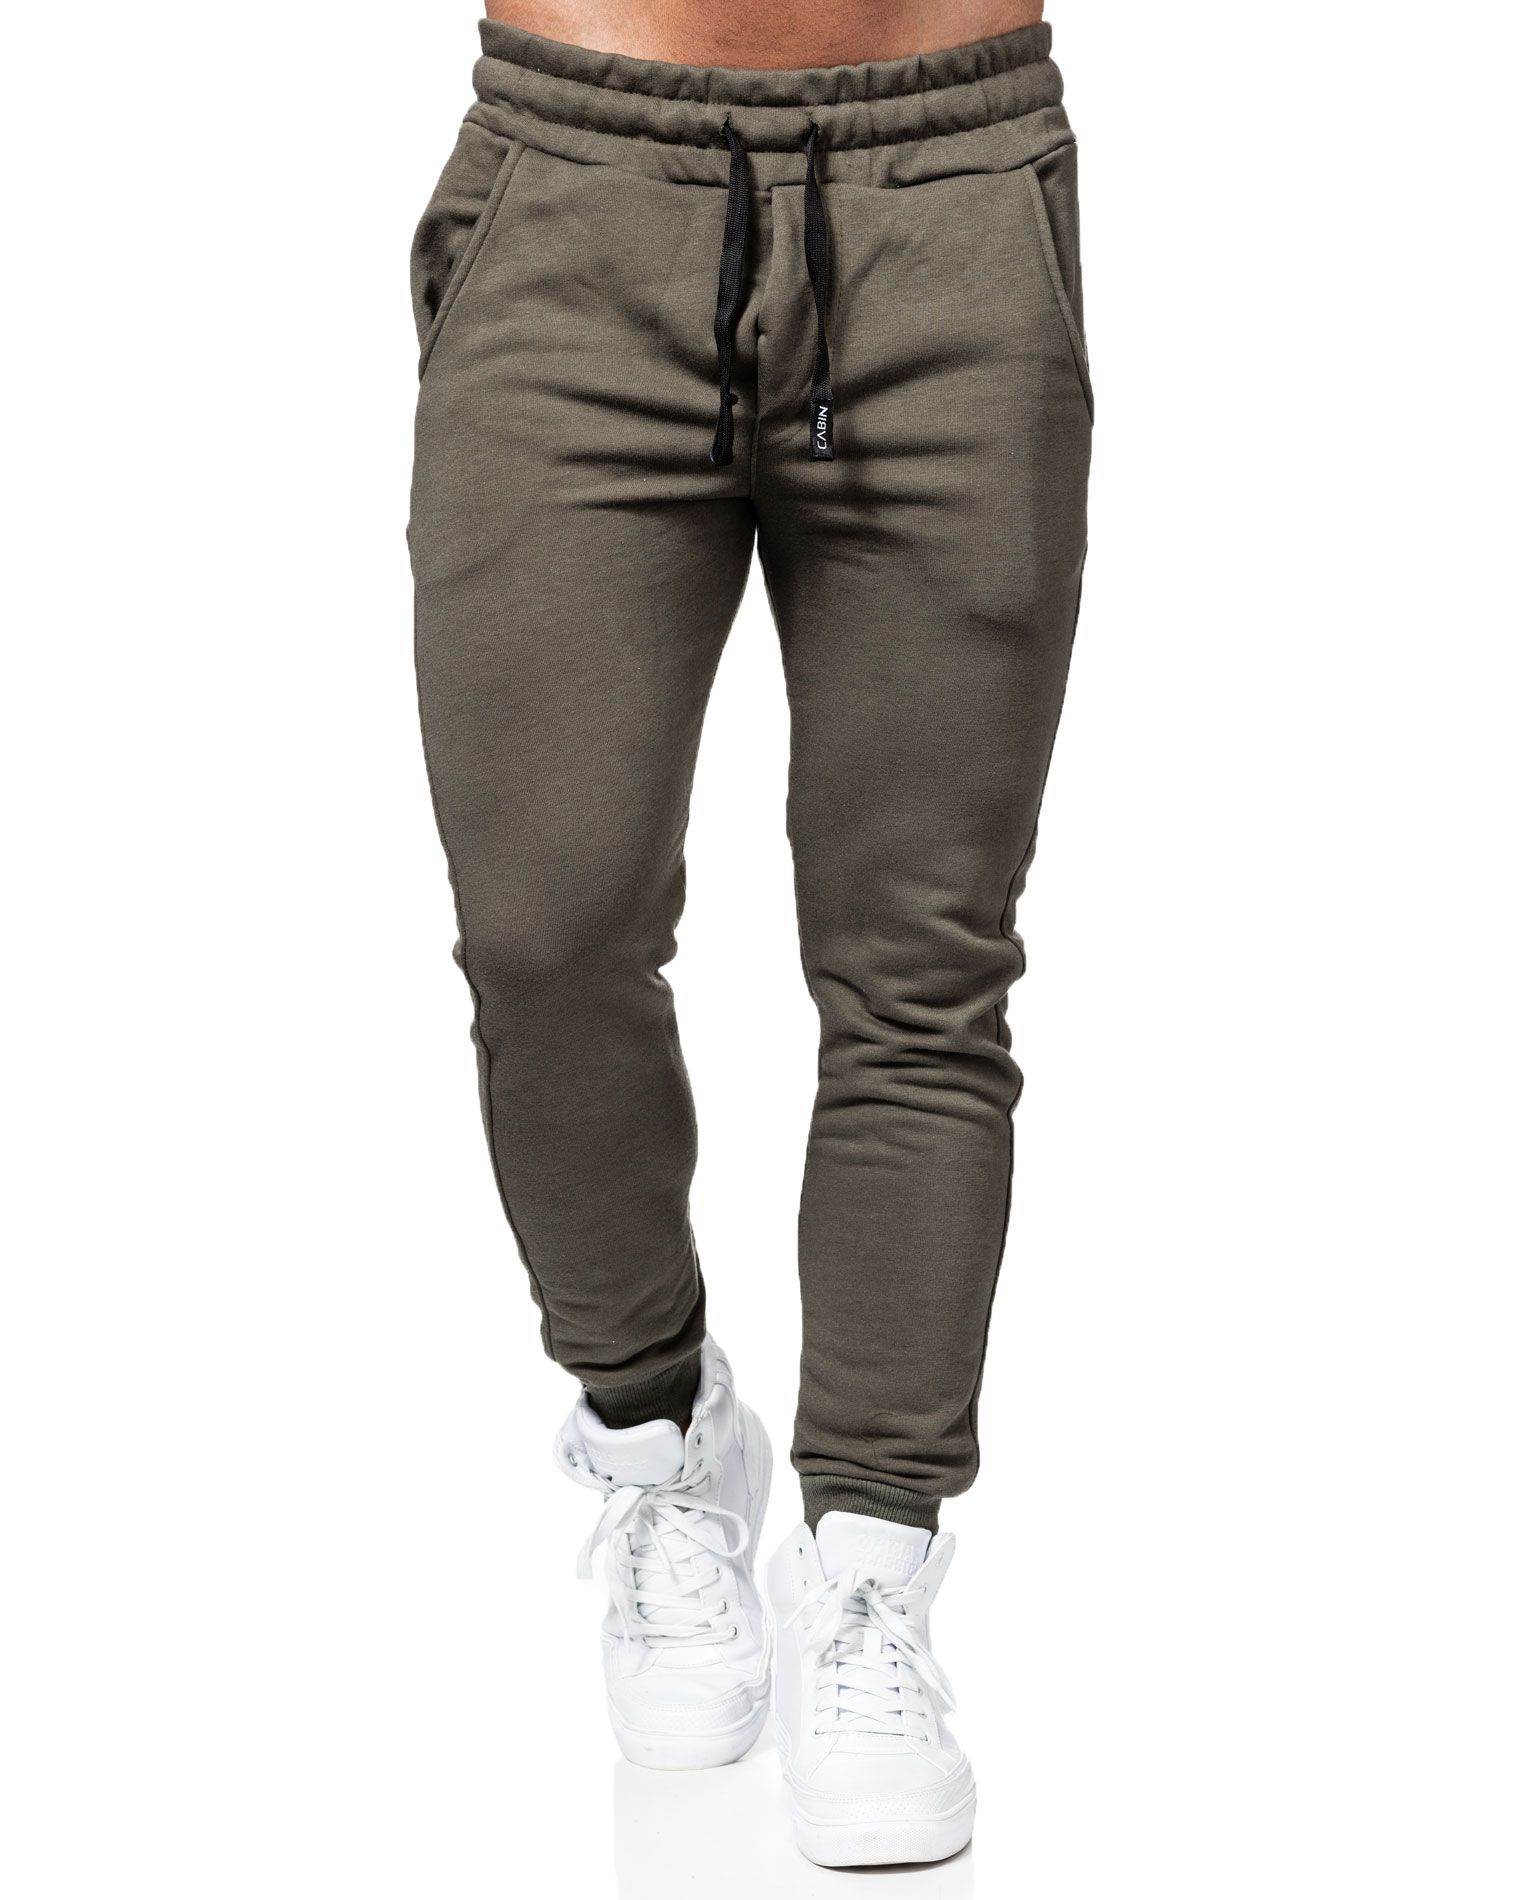 Khaki College Pants Jerone - 2220 - Trousers - Jerone.com